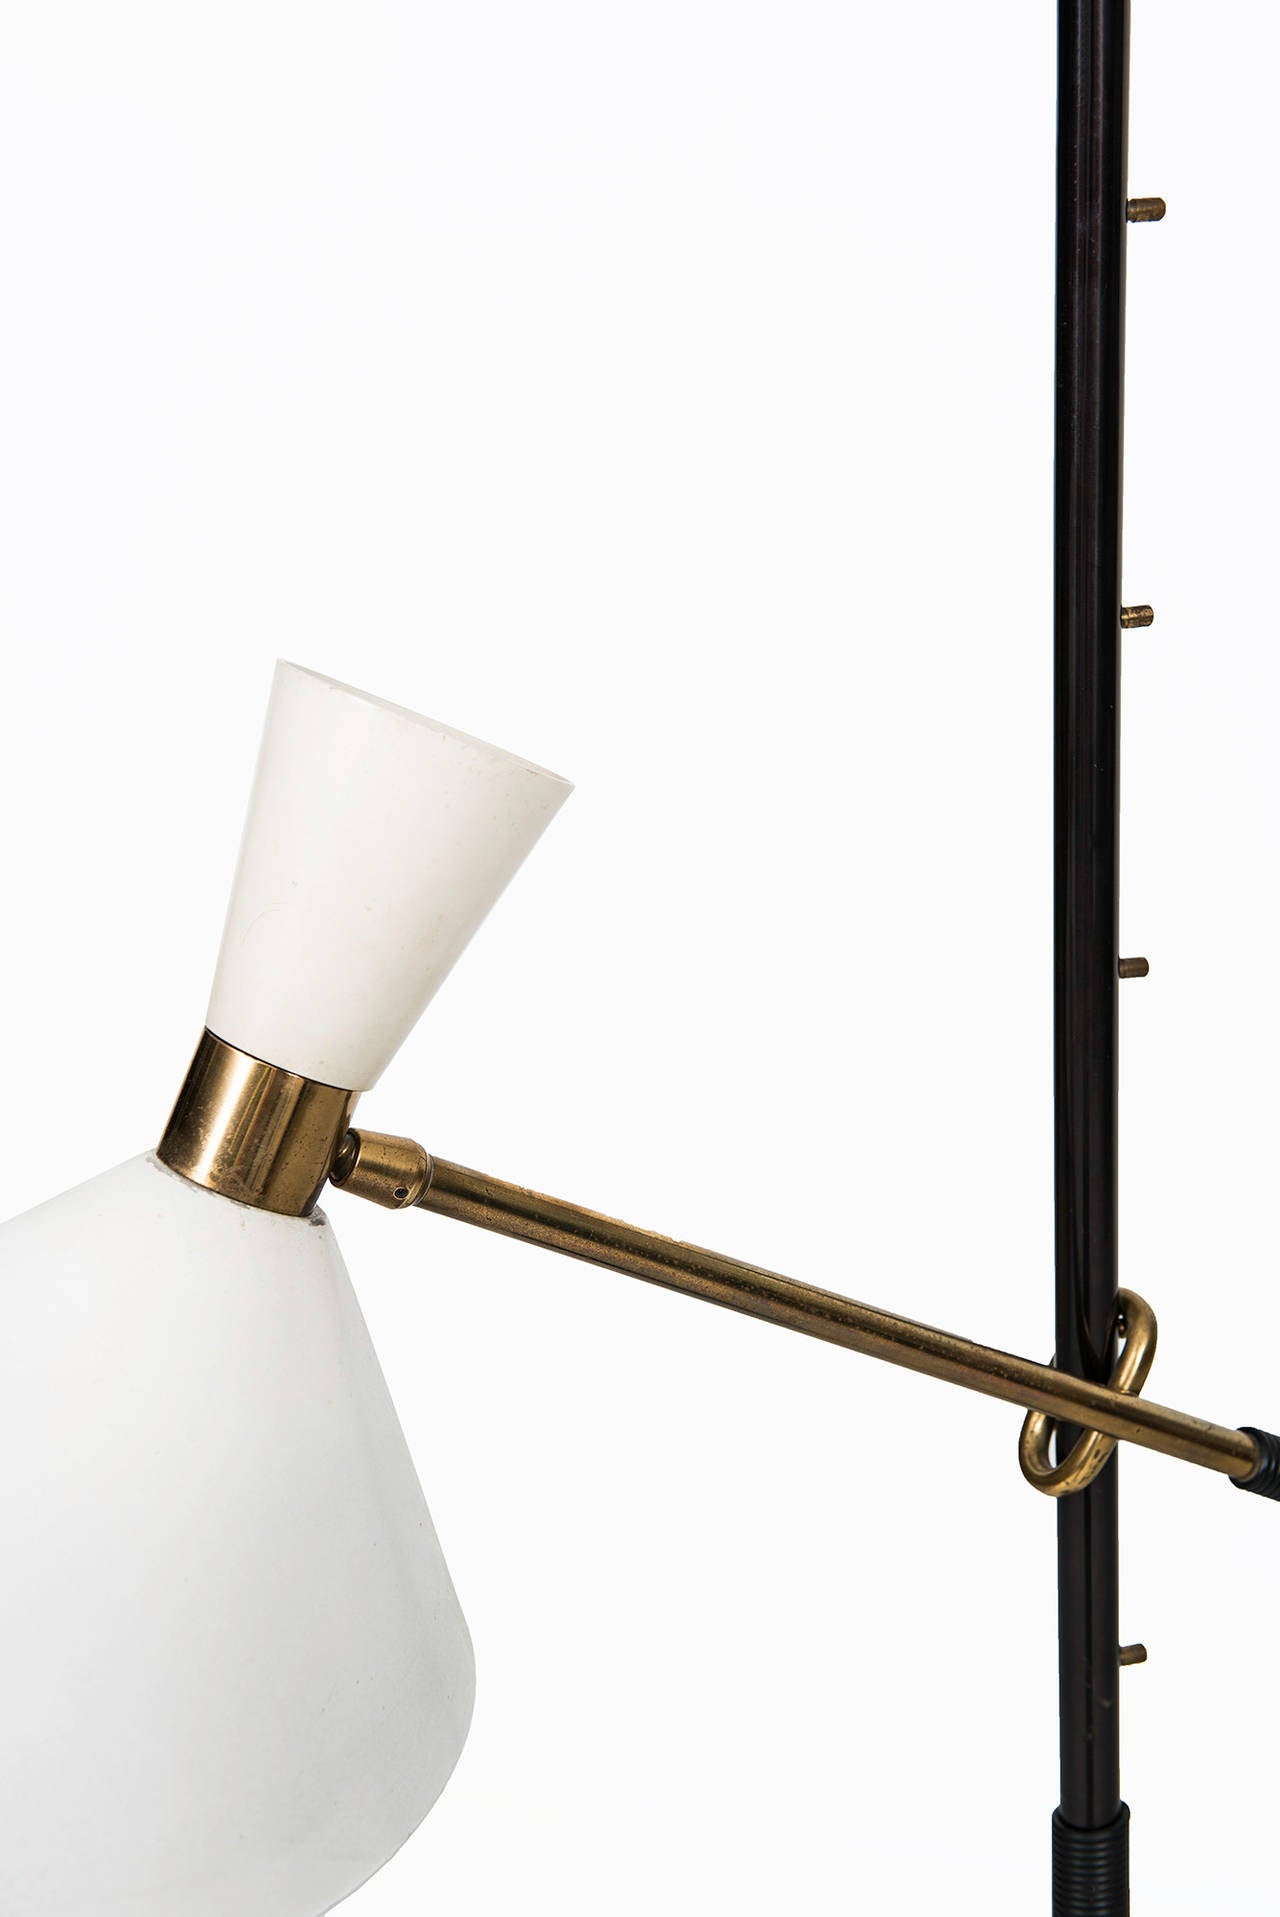 Austrian J.T Kalmar Floor Lamp Model Pelikan Produced in Austria